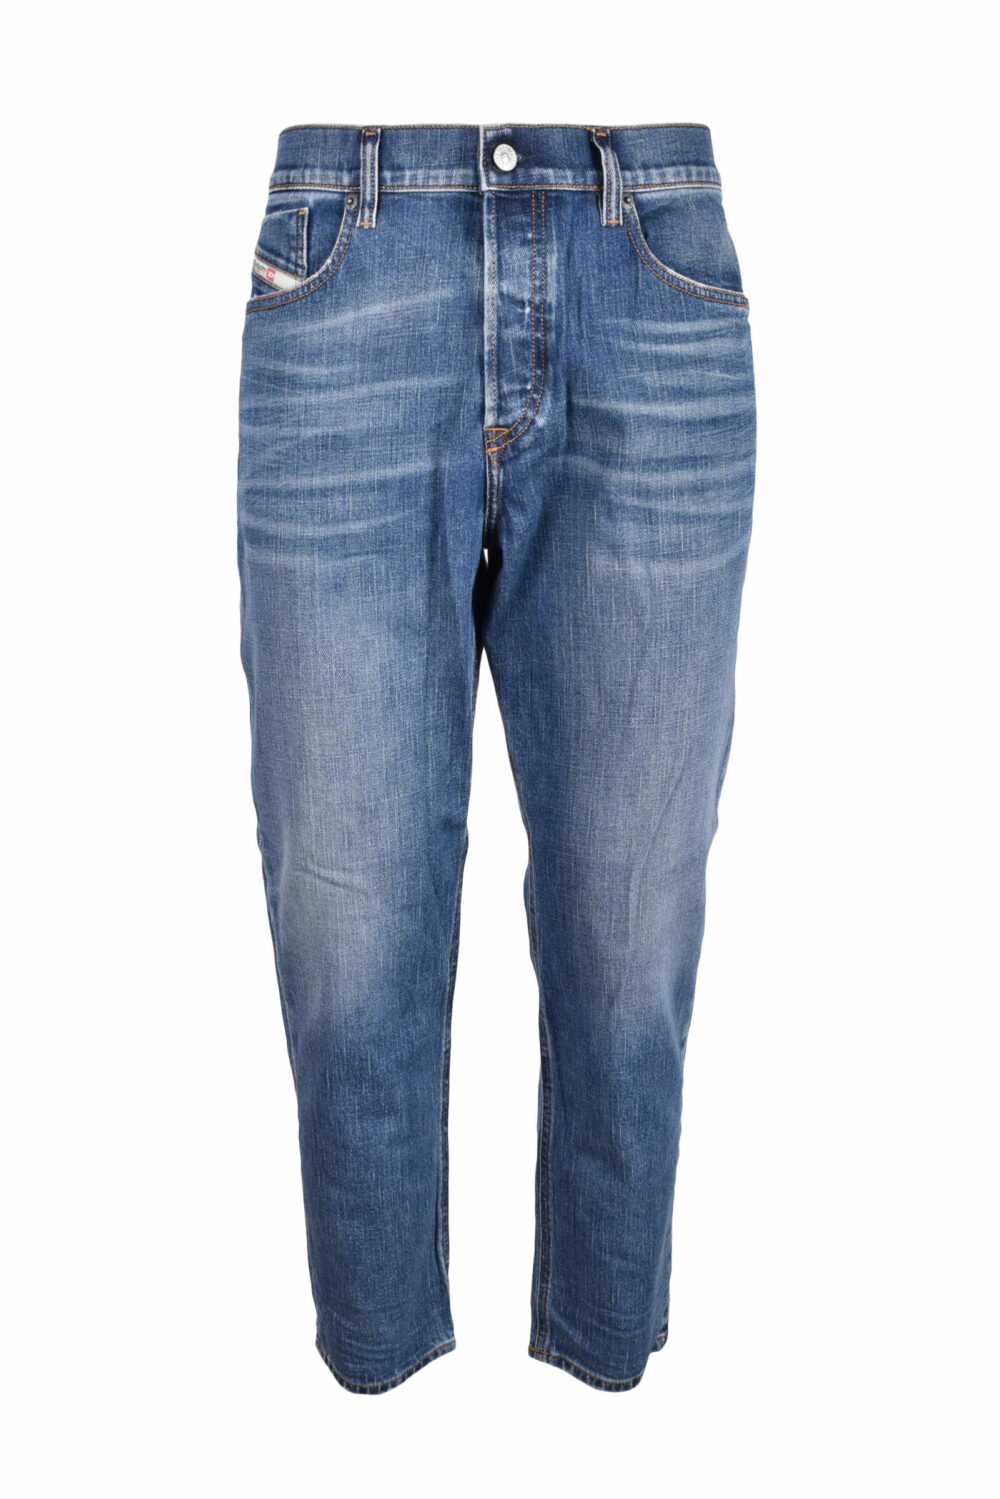 Jeans Diesel jeans Denim - Foto 1